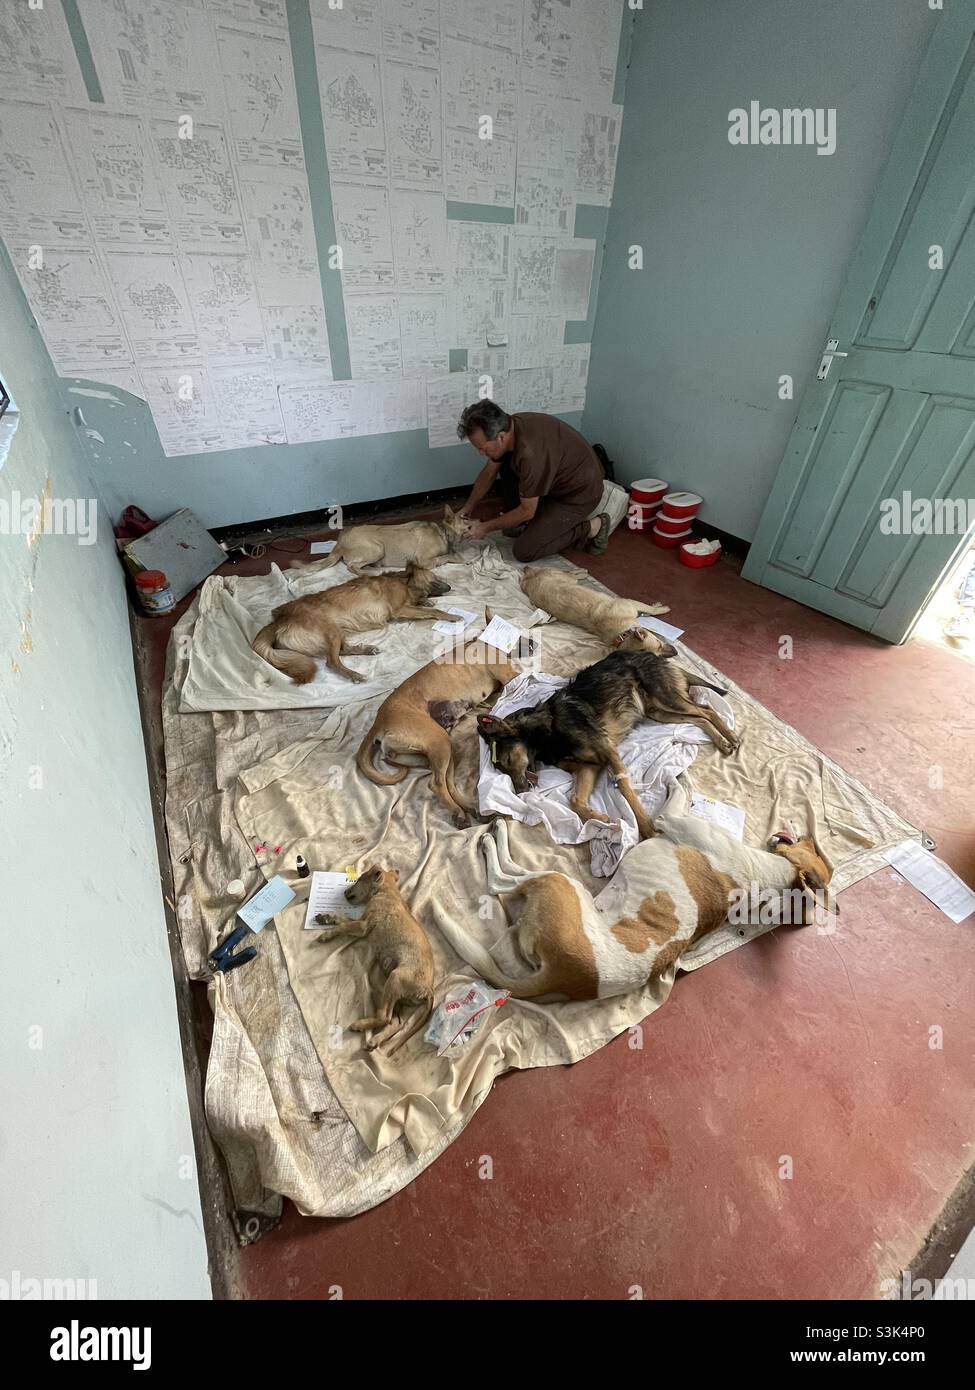 Recuperación de perros callejeros de anestesia, Tanzania Foto de stock